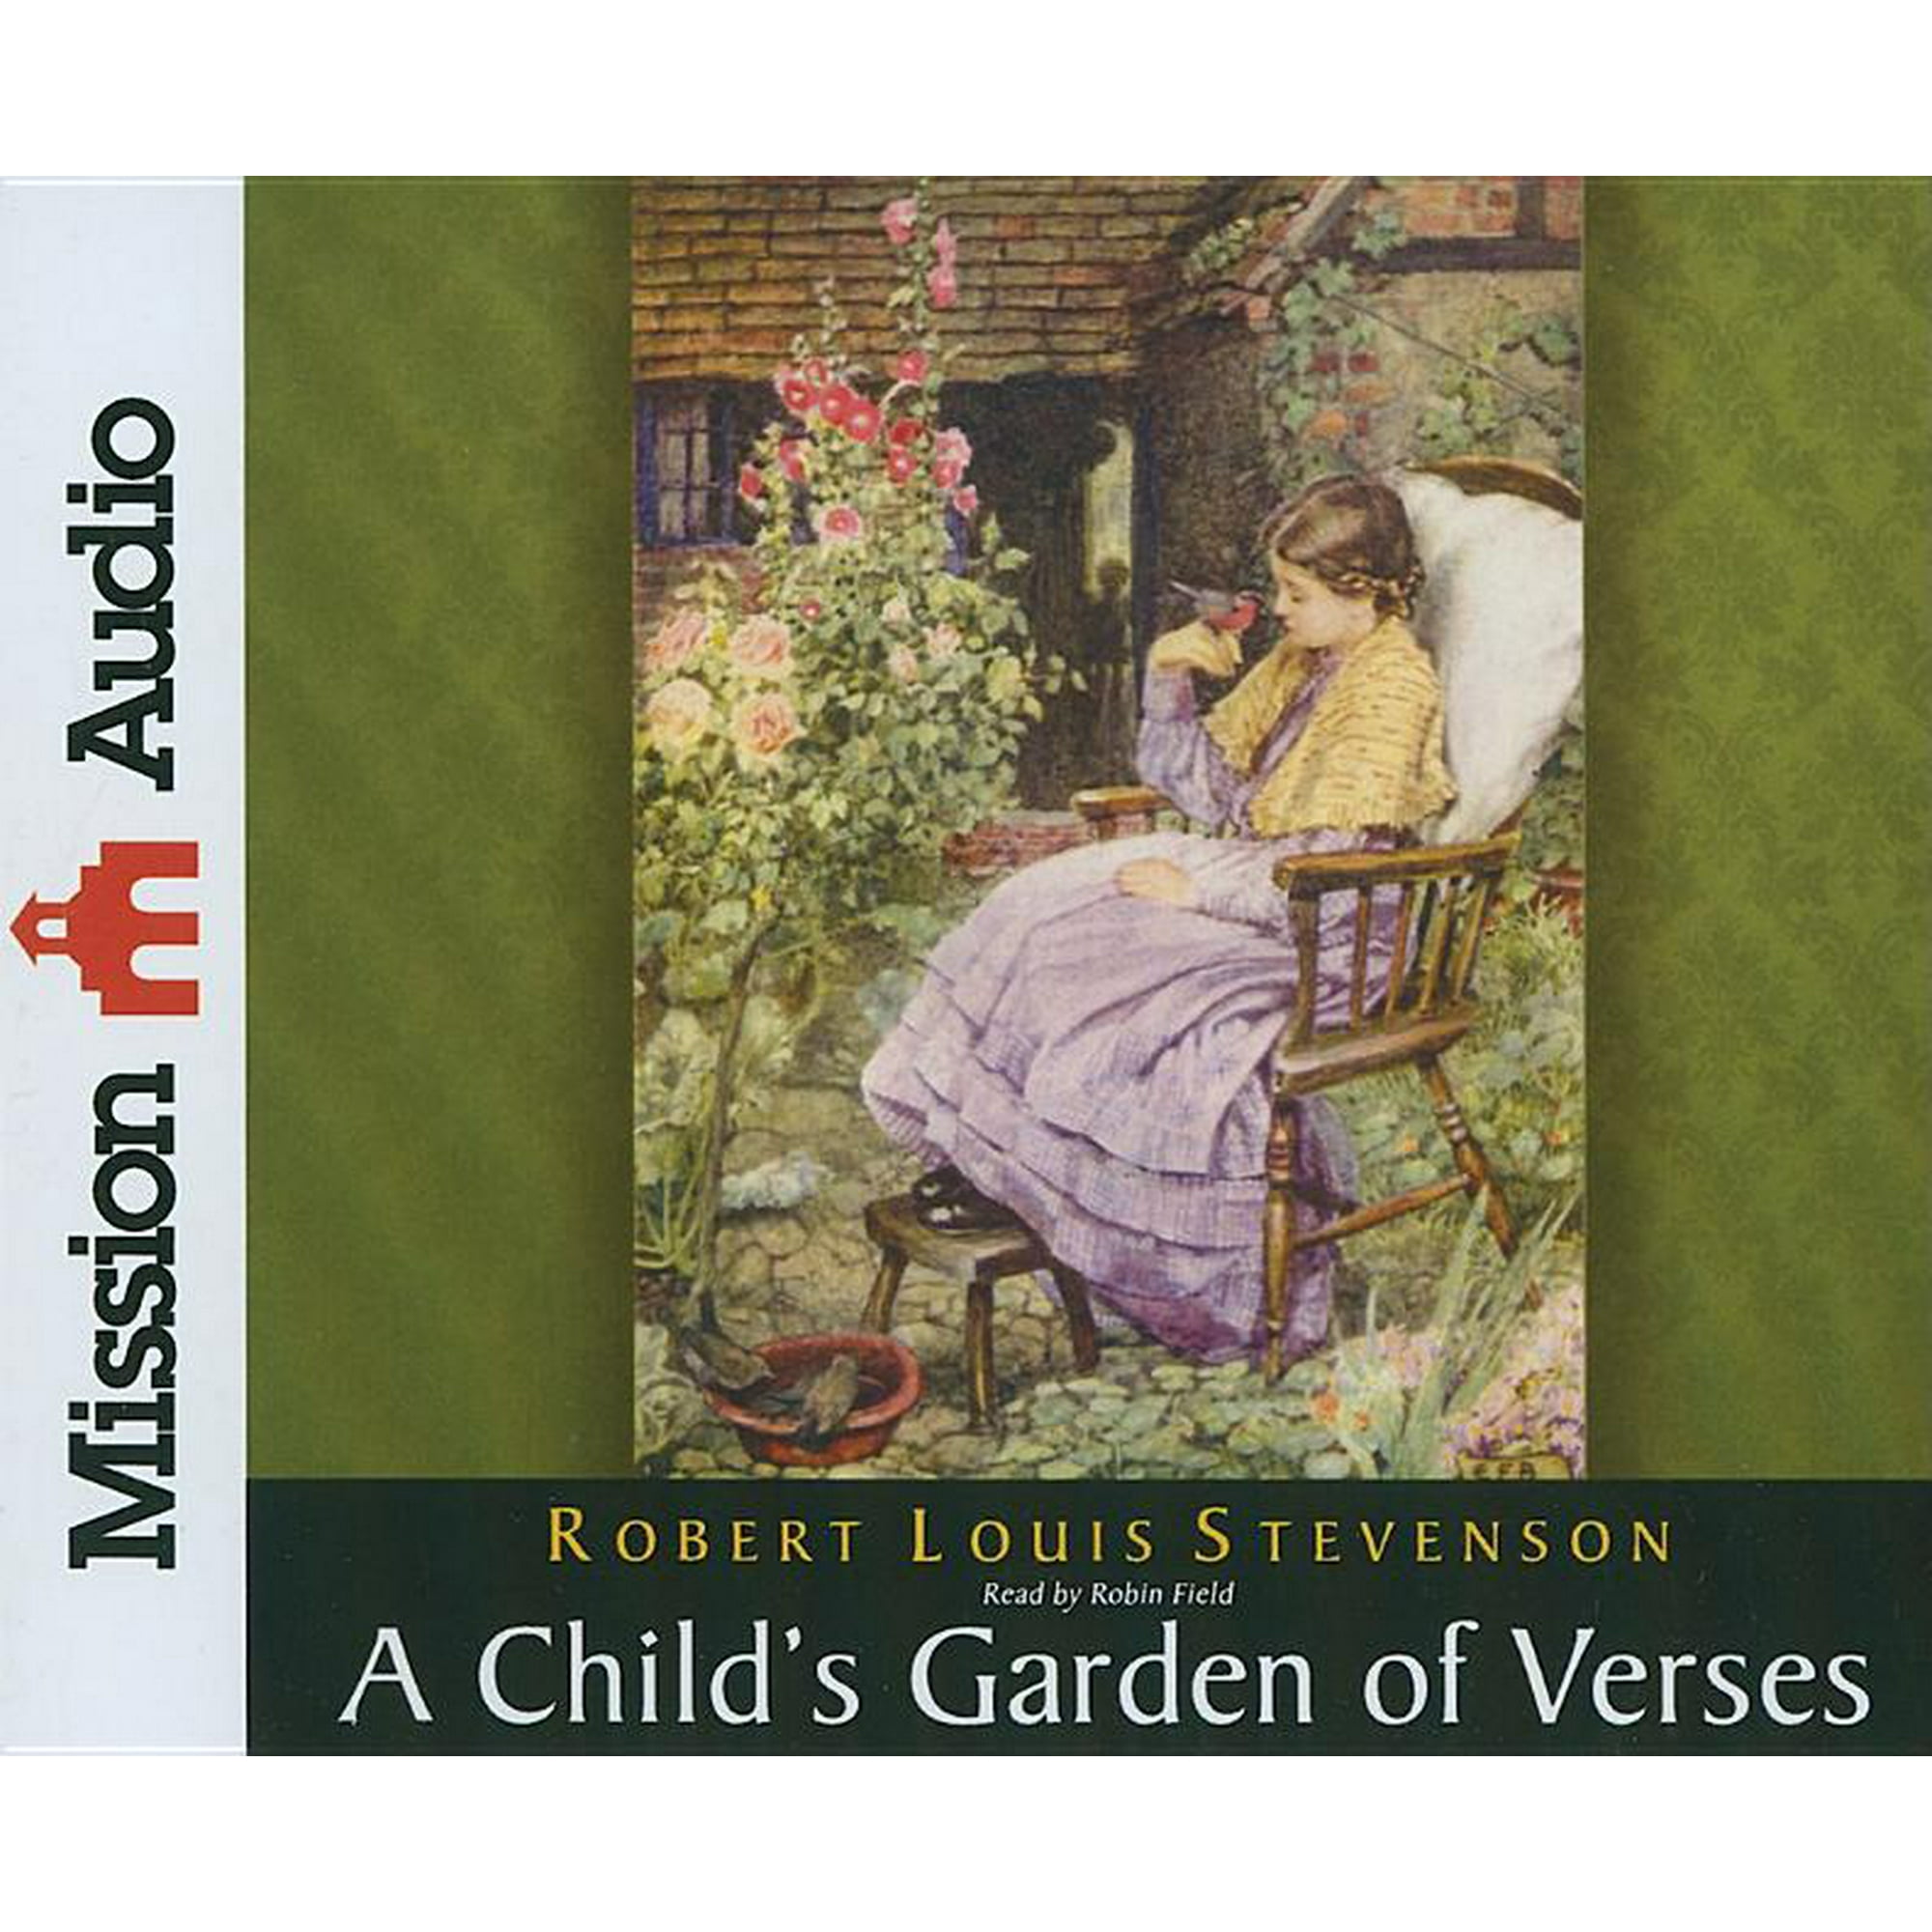 A Child's Garden of Verses Robert Louis Stevenson Vintage 